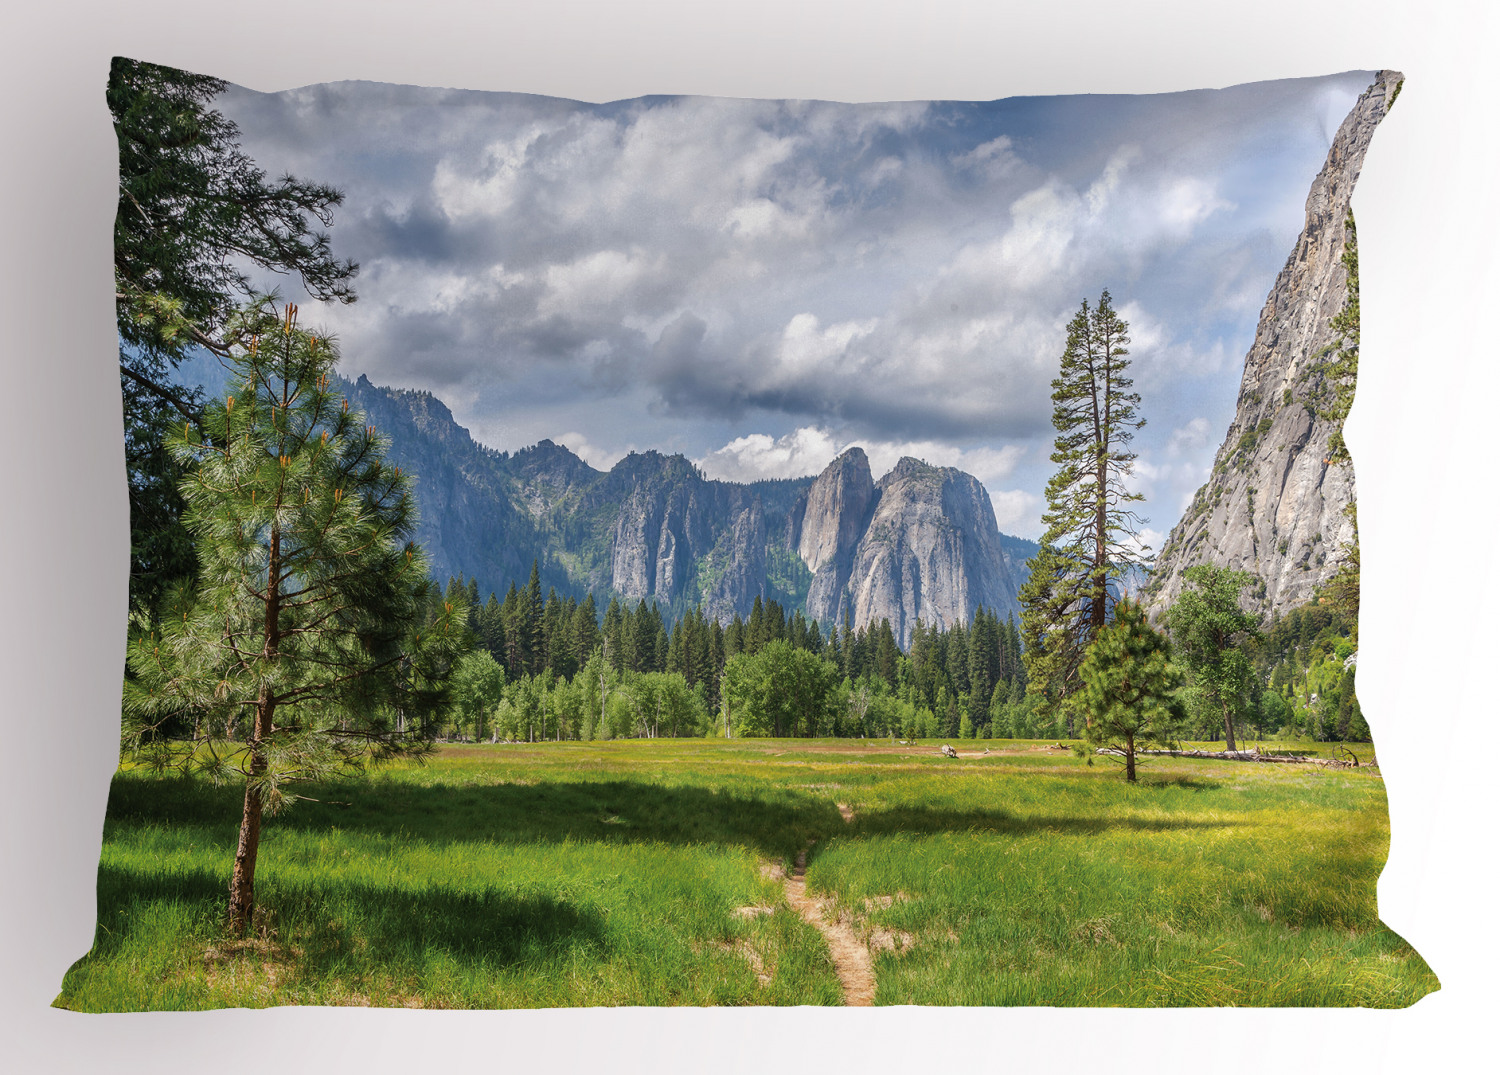 Details about   Yosemite Pillow Sham Decorative Pillowcase 3 Sizes for Bedroom Decor